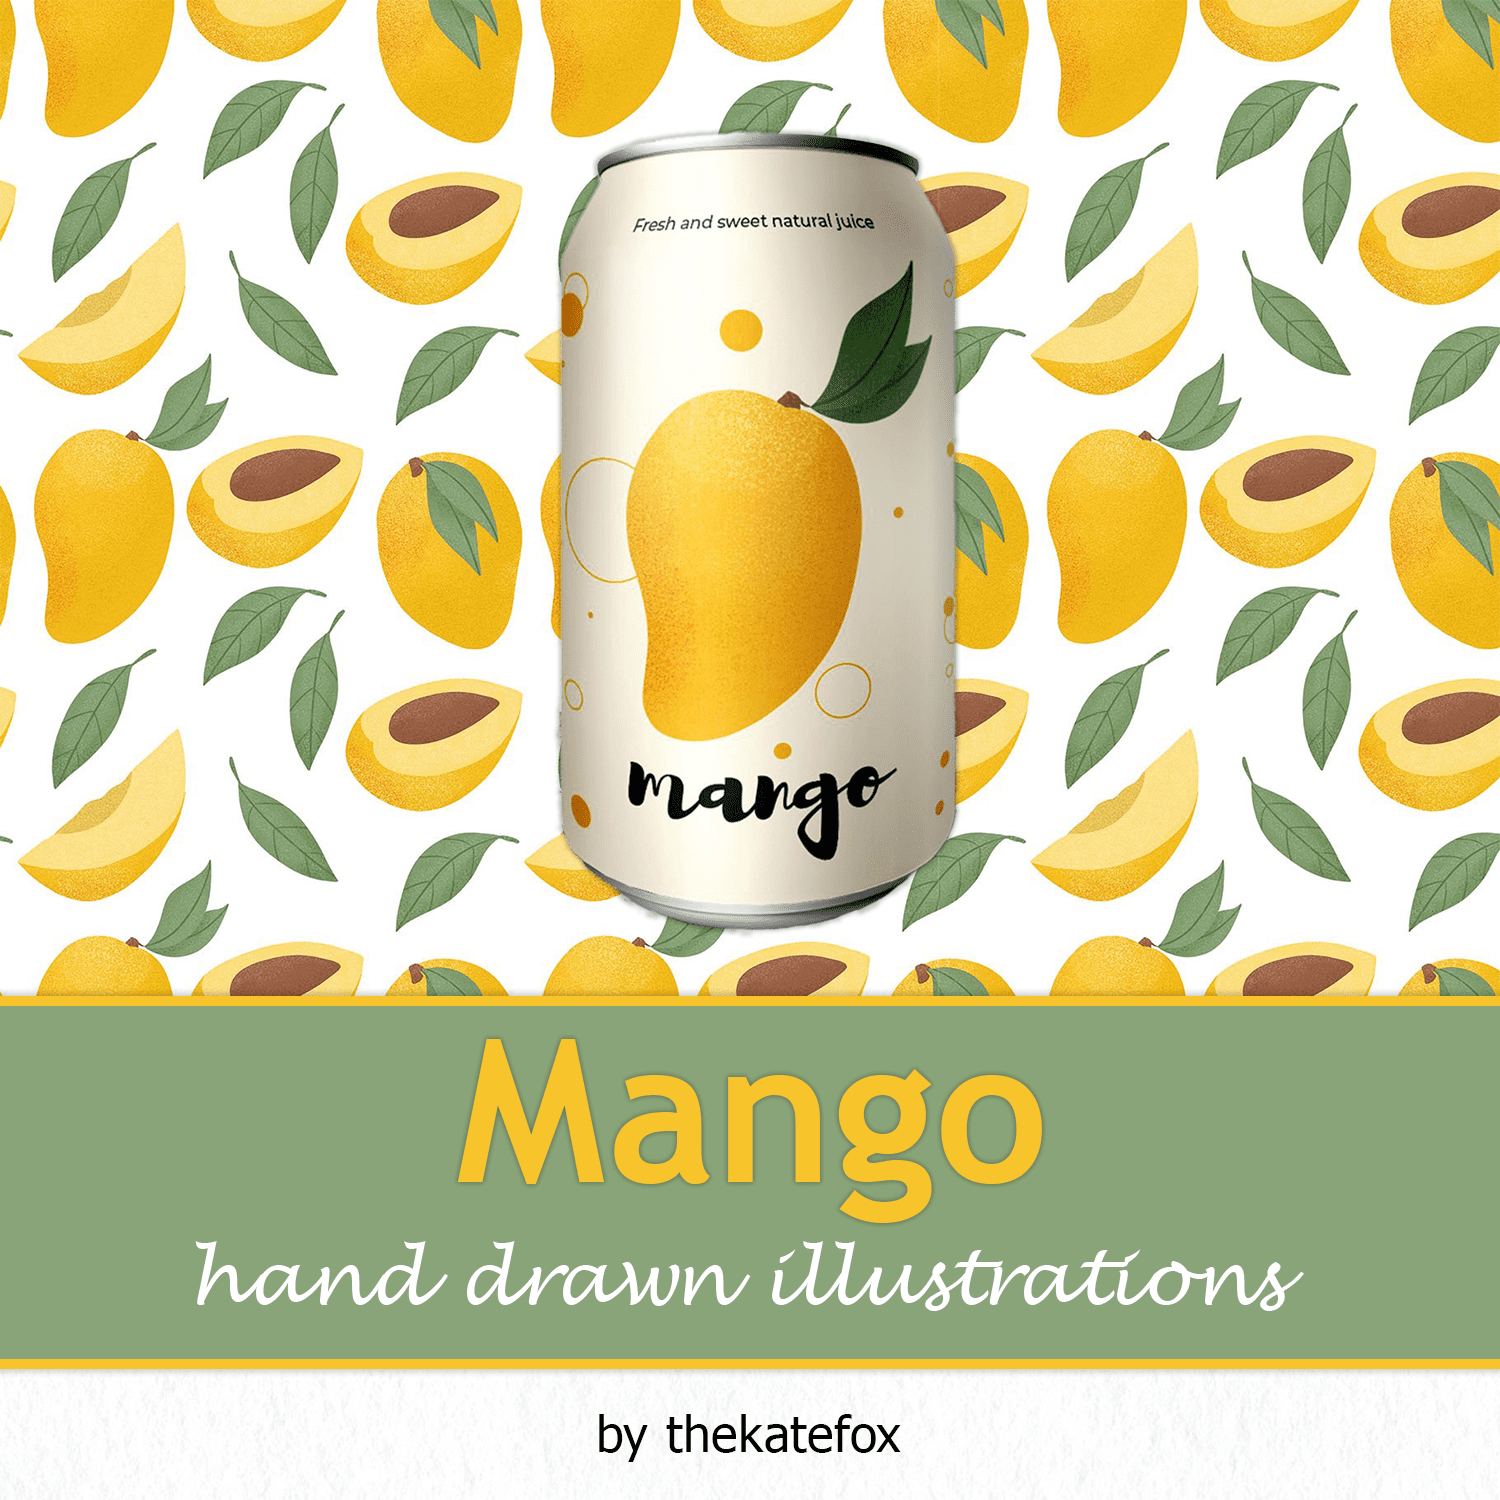 Mango hand drawn illustrations - main image preview.